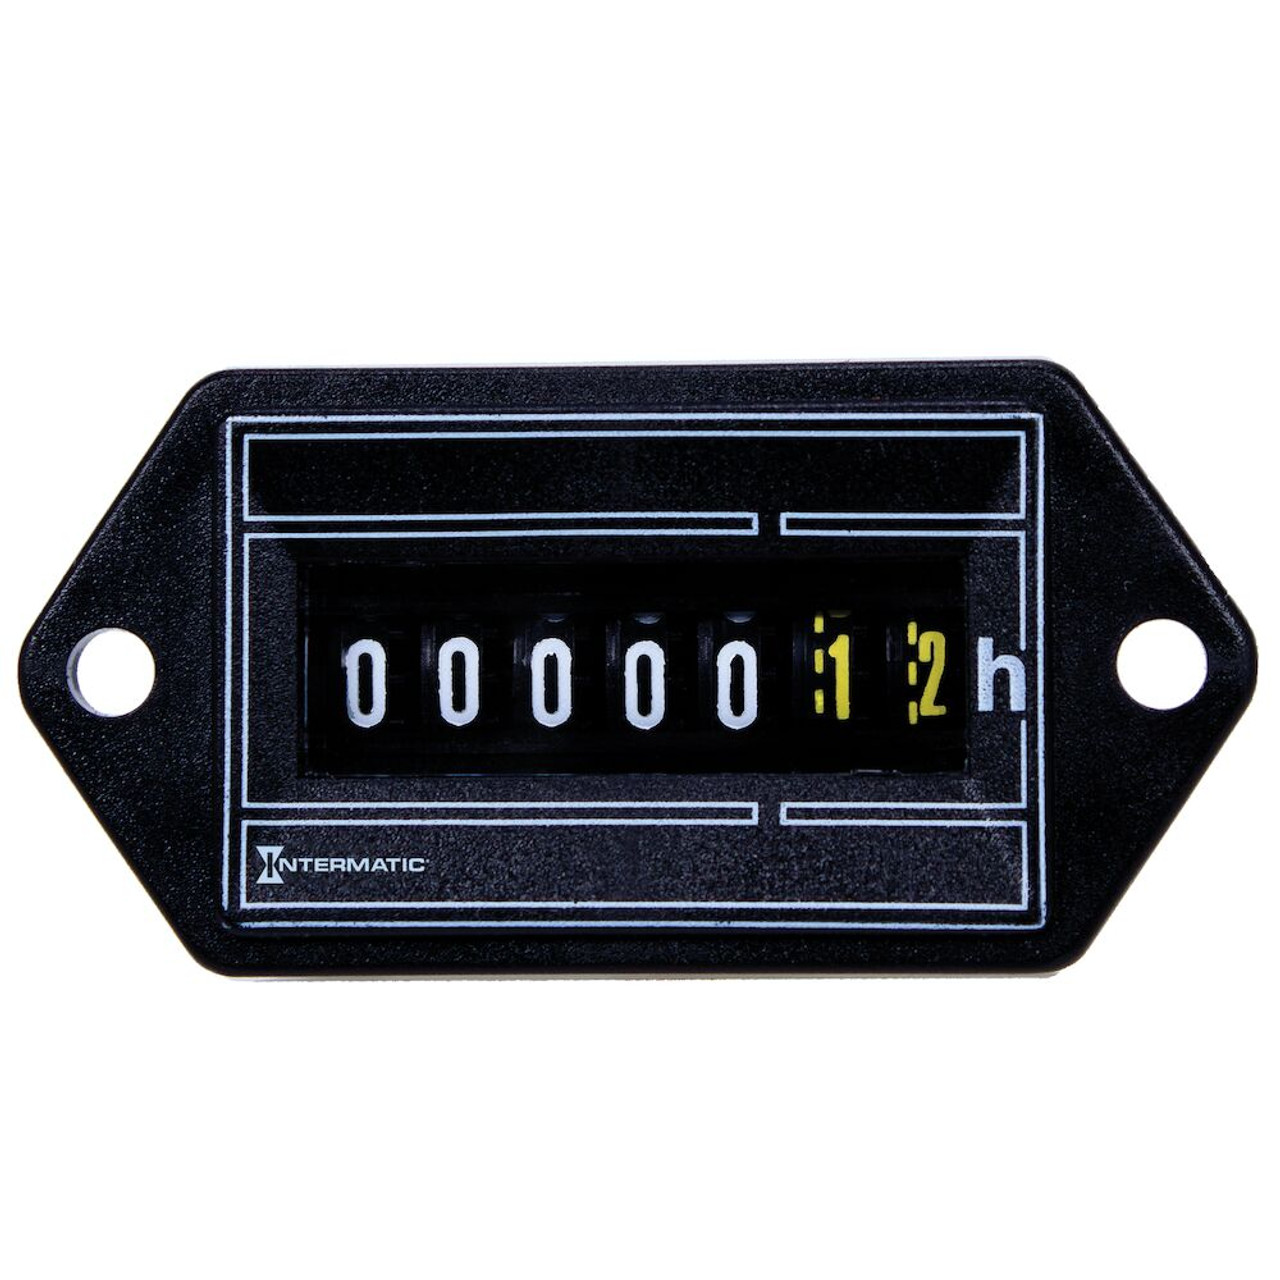 Intermatic FWZ53-220/50U Counters Meters